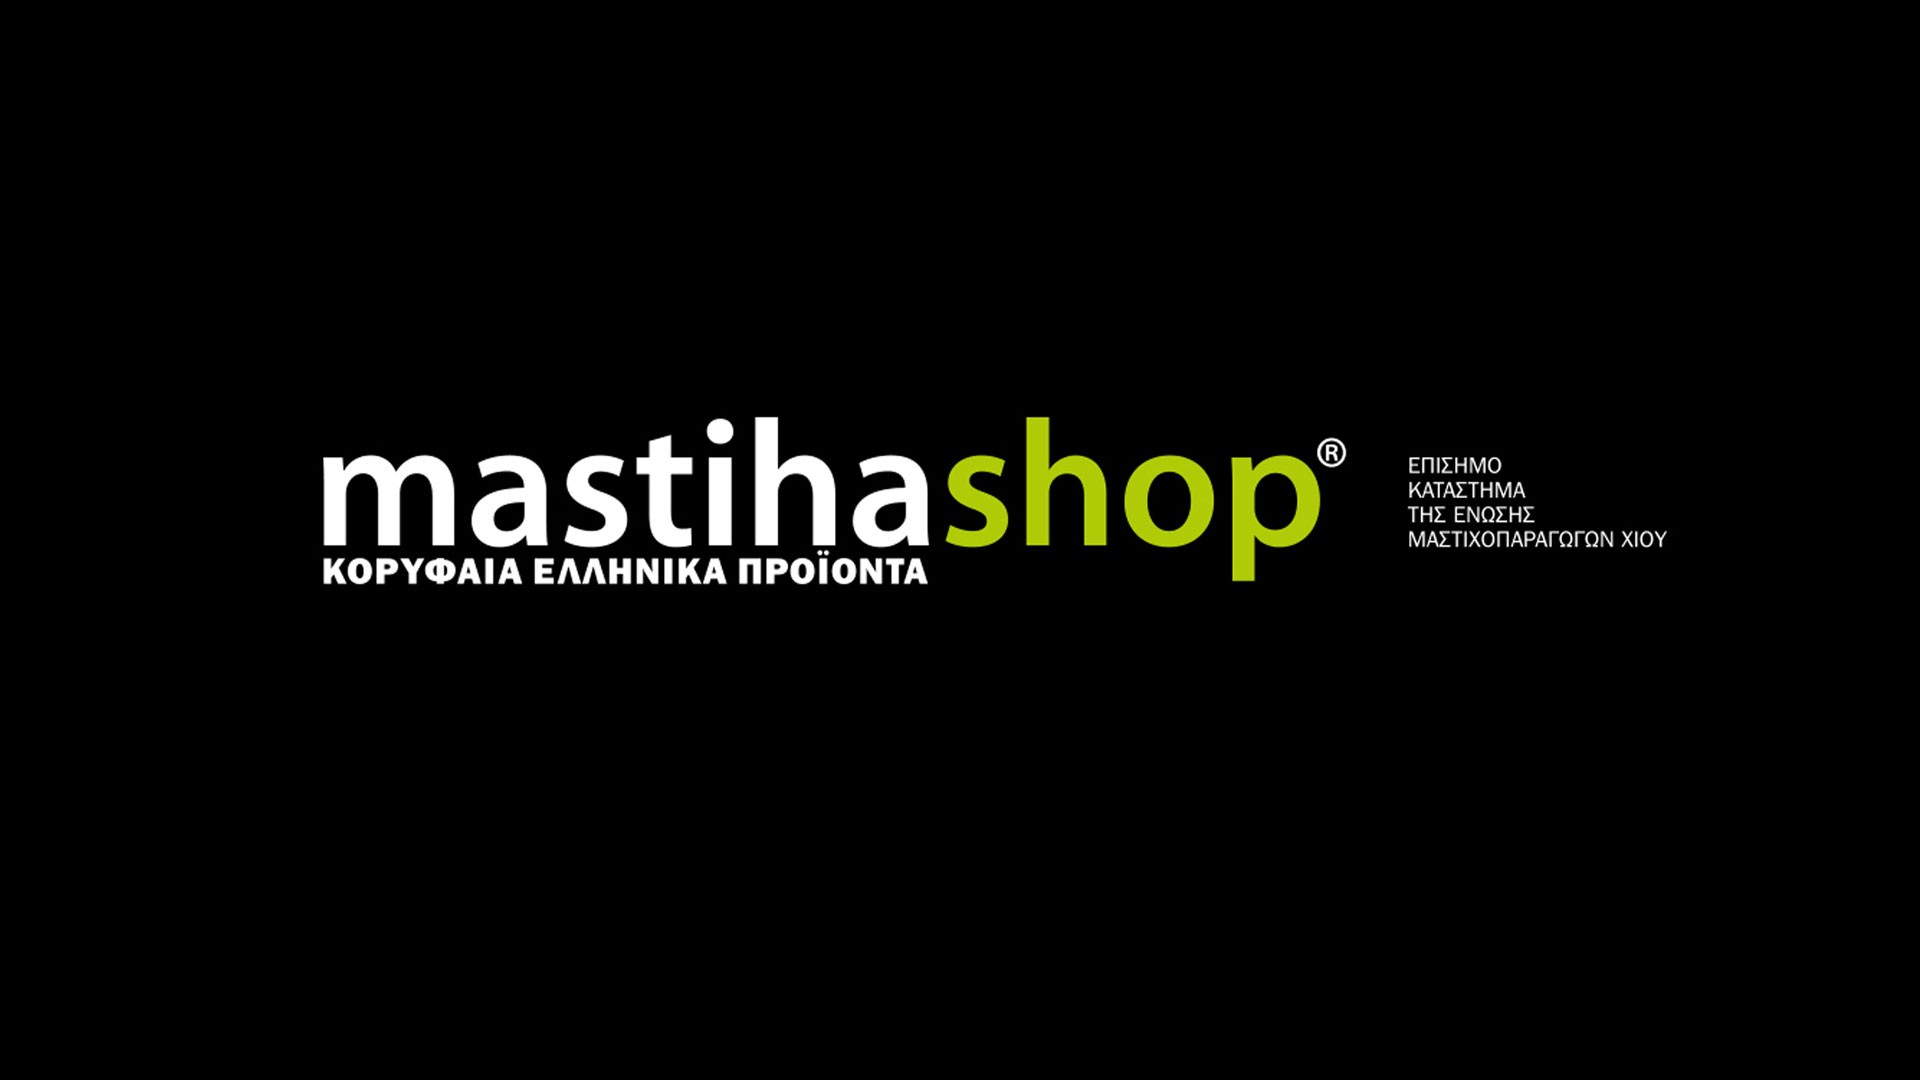 Mastihashop - Εταιρική Ταυτότητα